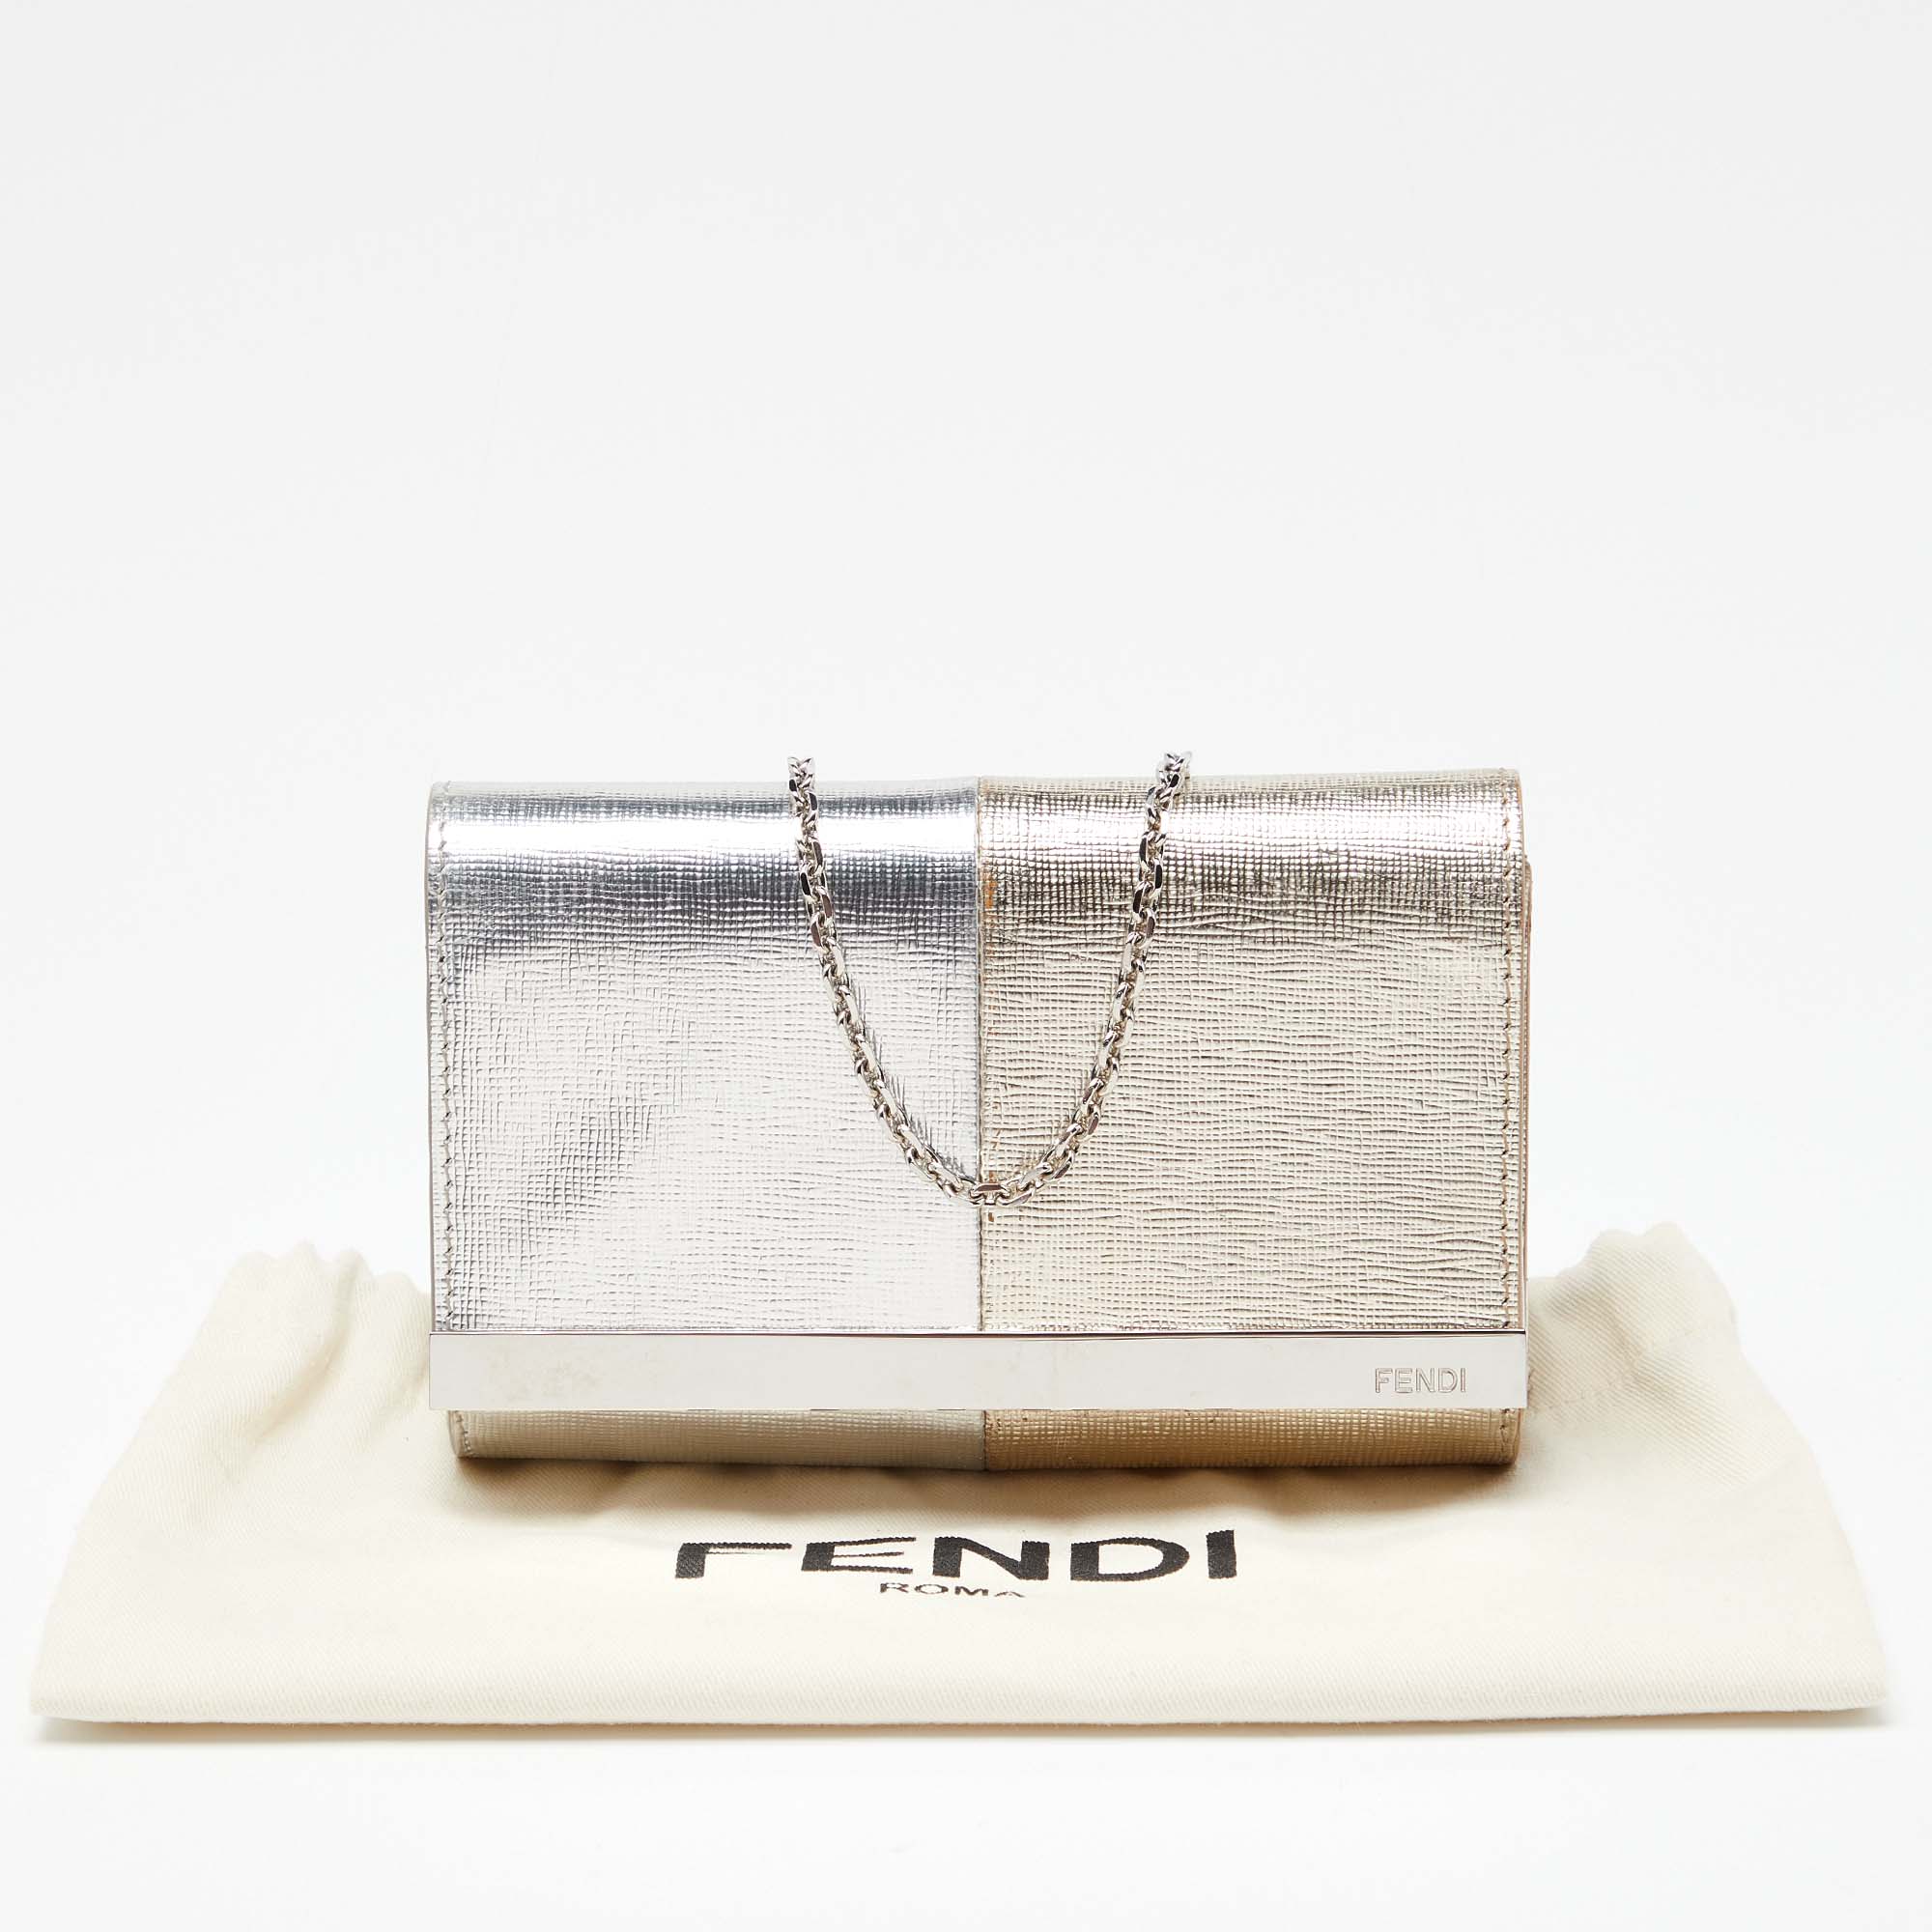 Fendi Silver/Gold Patent Leather Mini Rush Chain Clutch